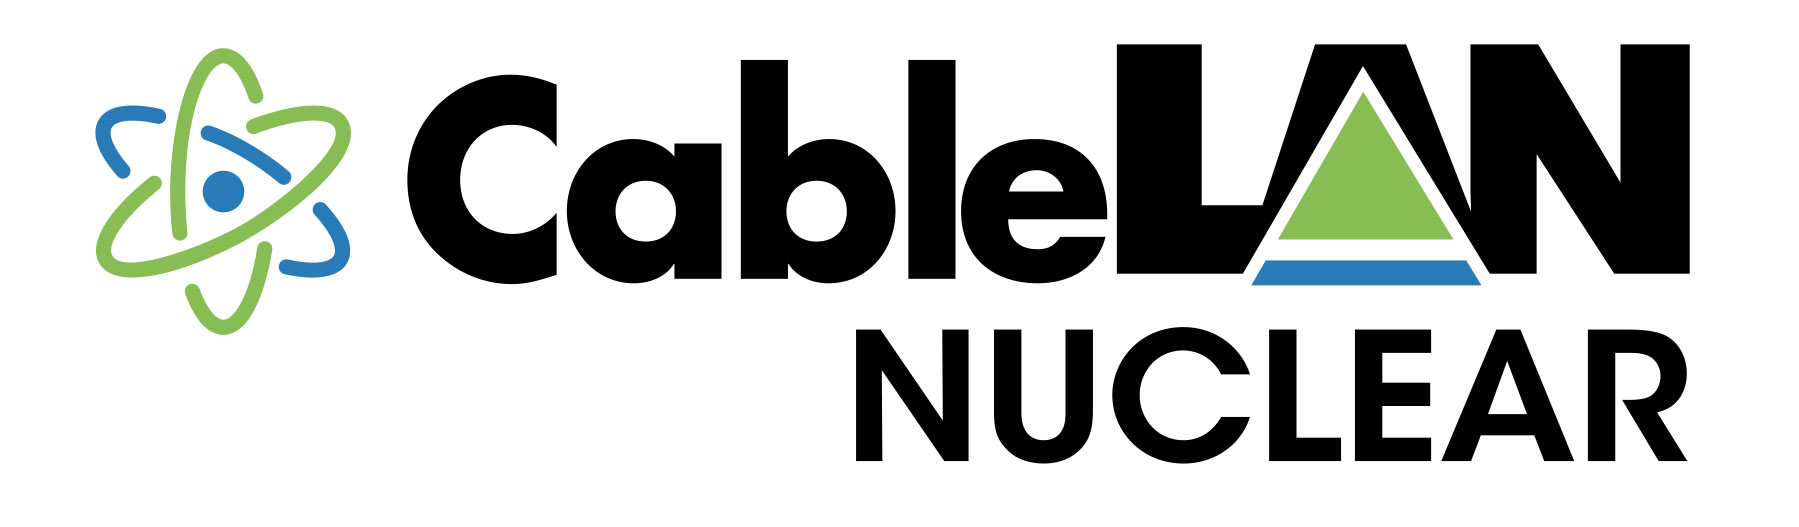 CableLAN Nuclear logo